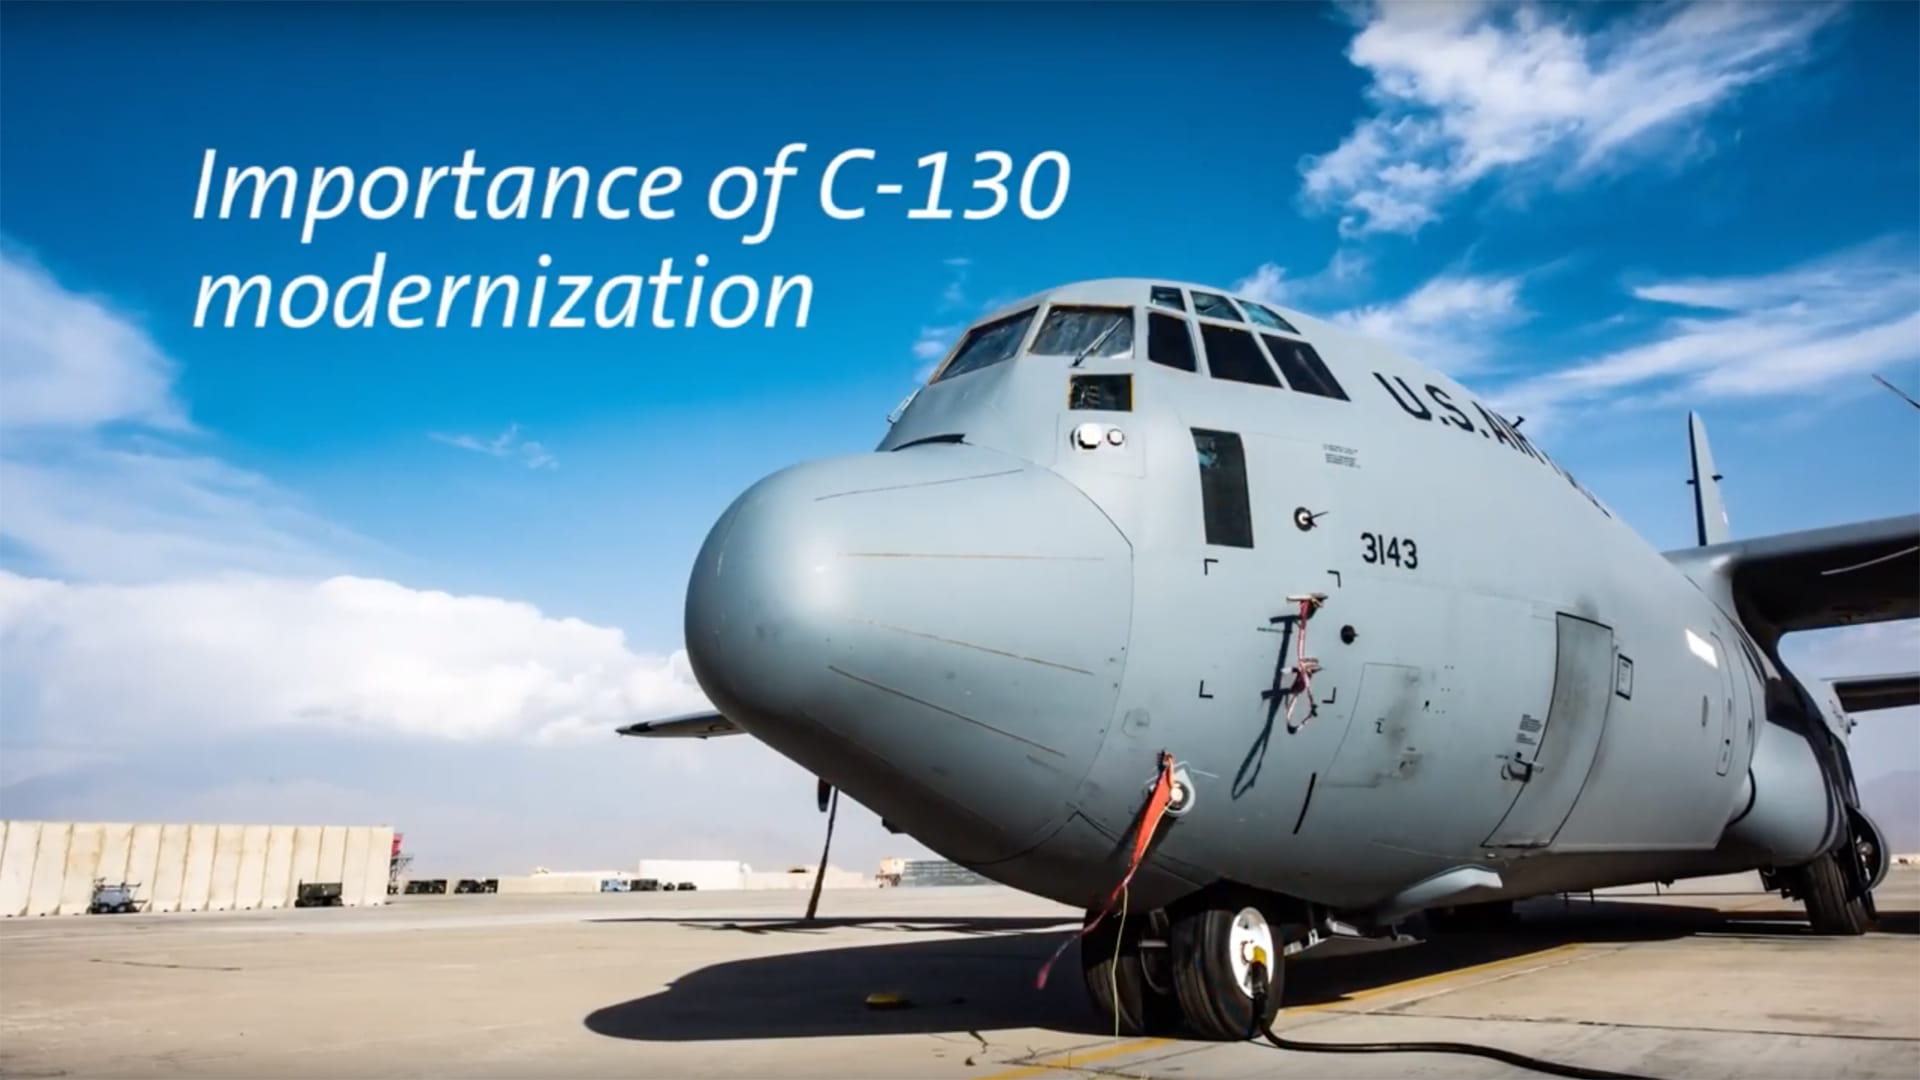 Ad for military C-130 modernization